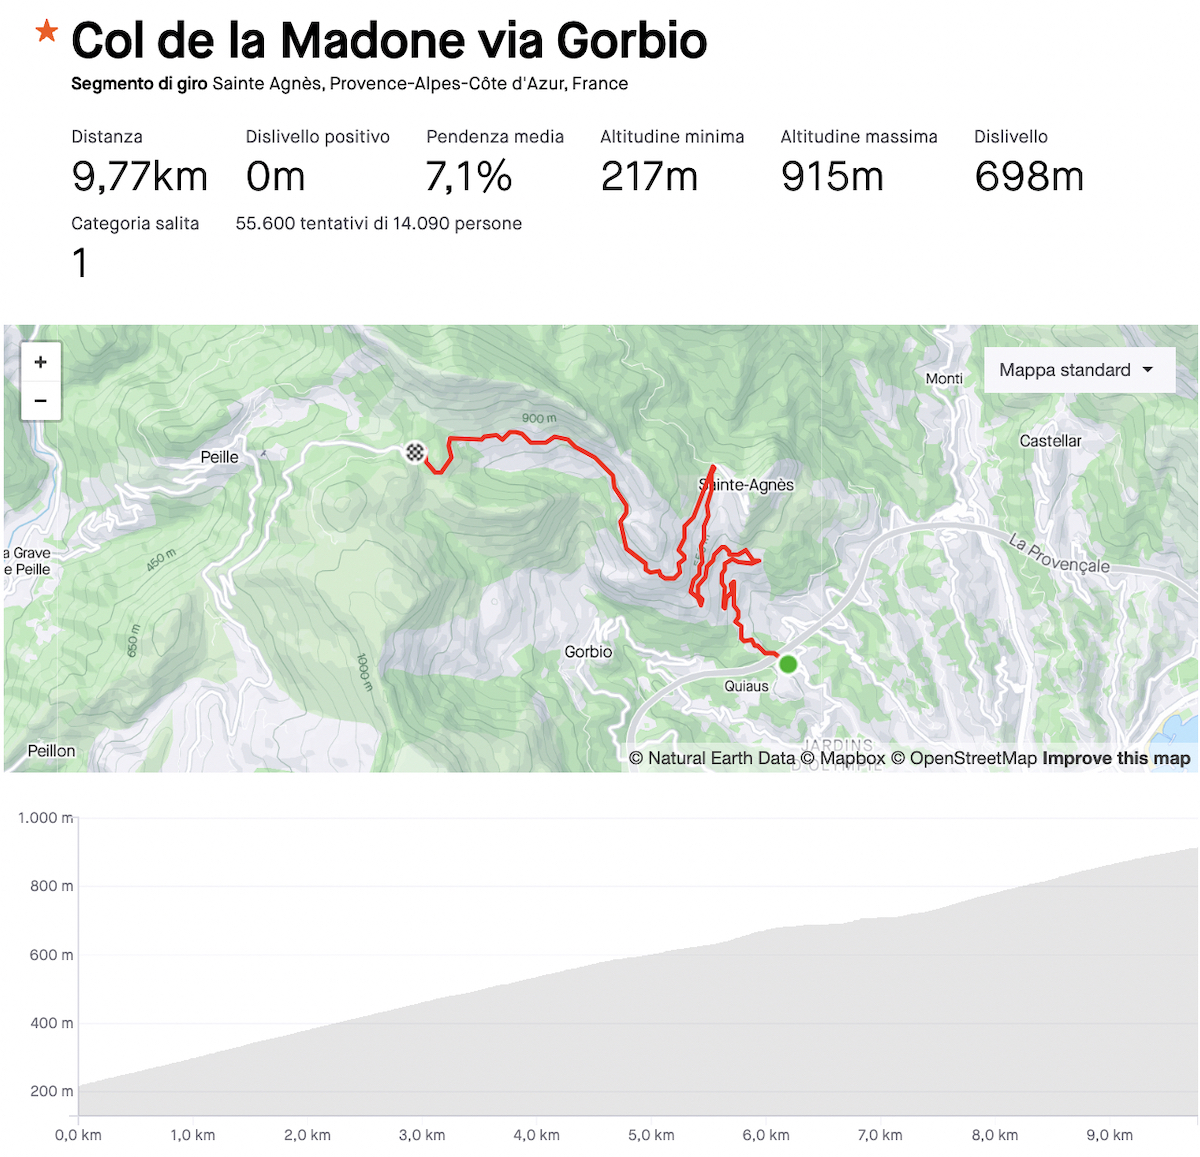 Pogačar sul Col de la Madone